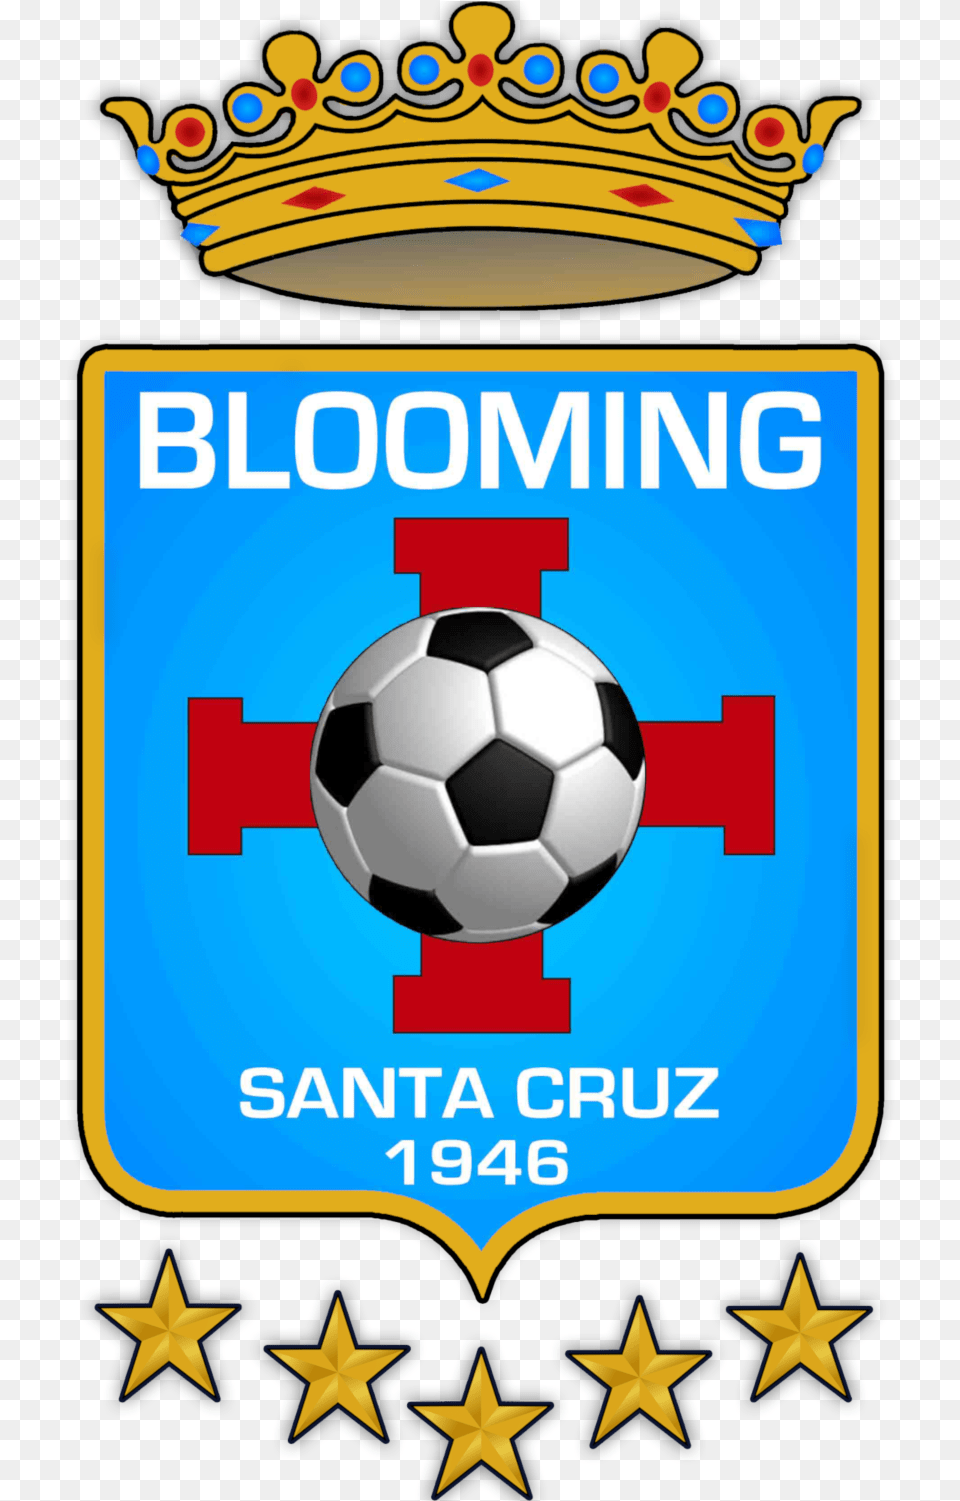 Escudo De Blooming Blooming Bolivia, Ball, Football, Soccer, Soccer Ball Png Image